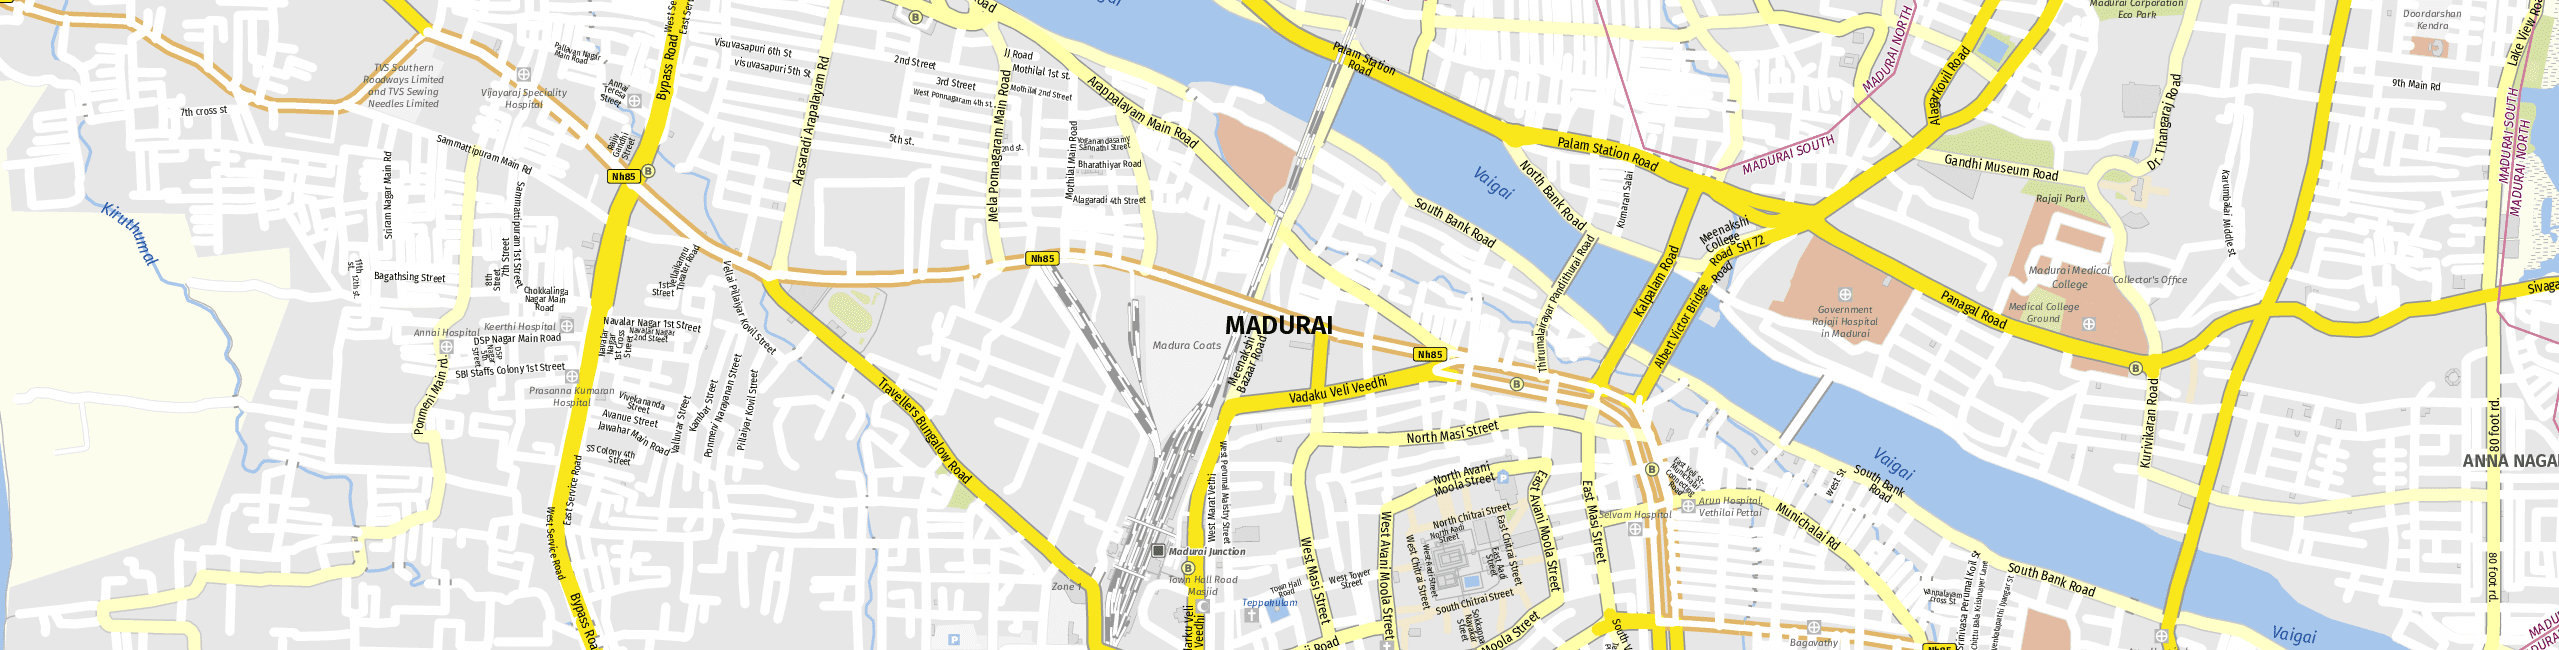 Stadtplan Madurai zum Downloaden.